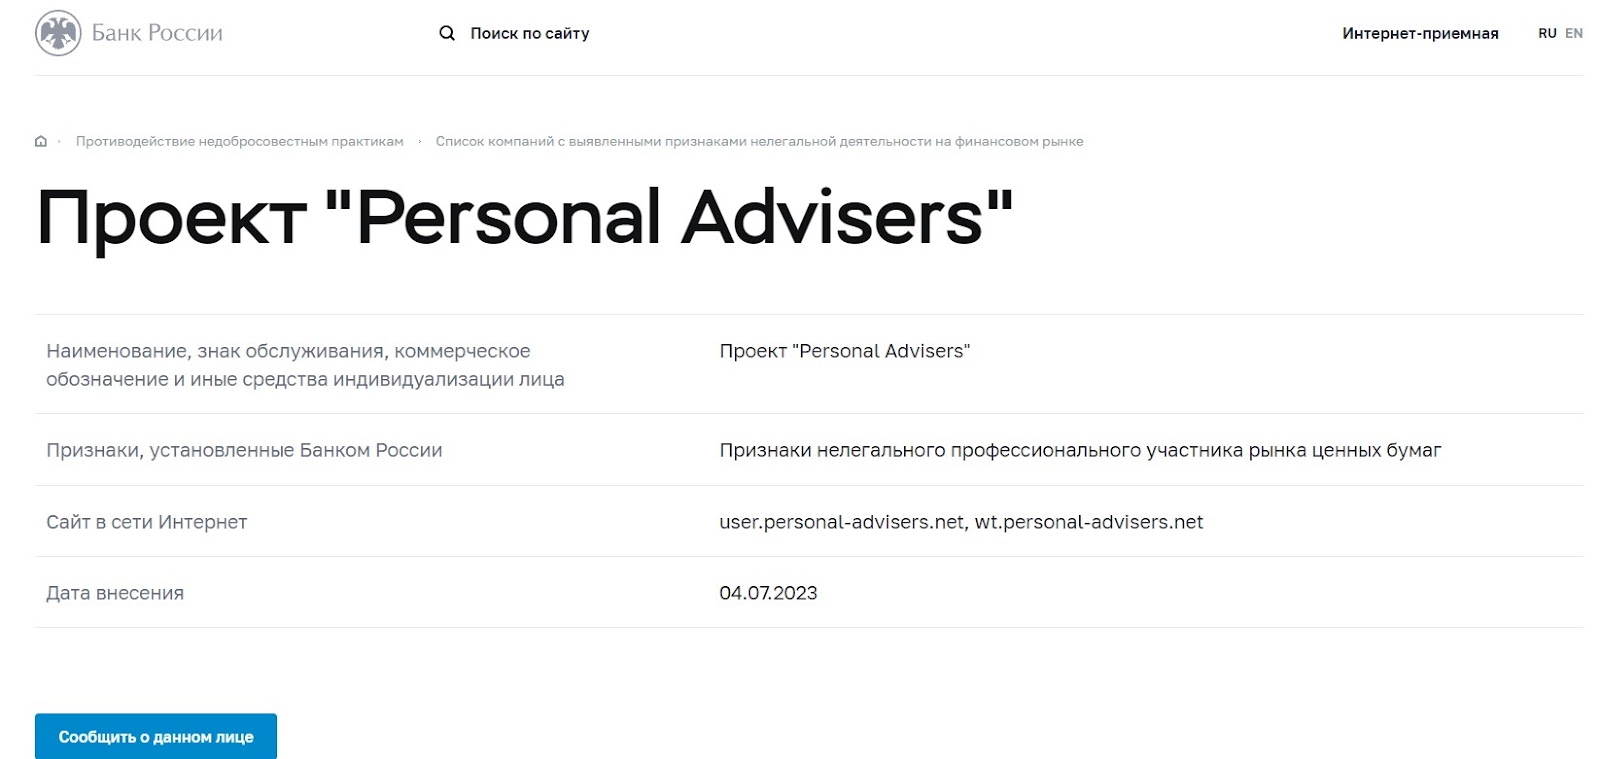 Personal Advisers лицензия